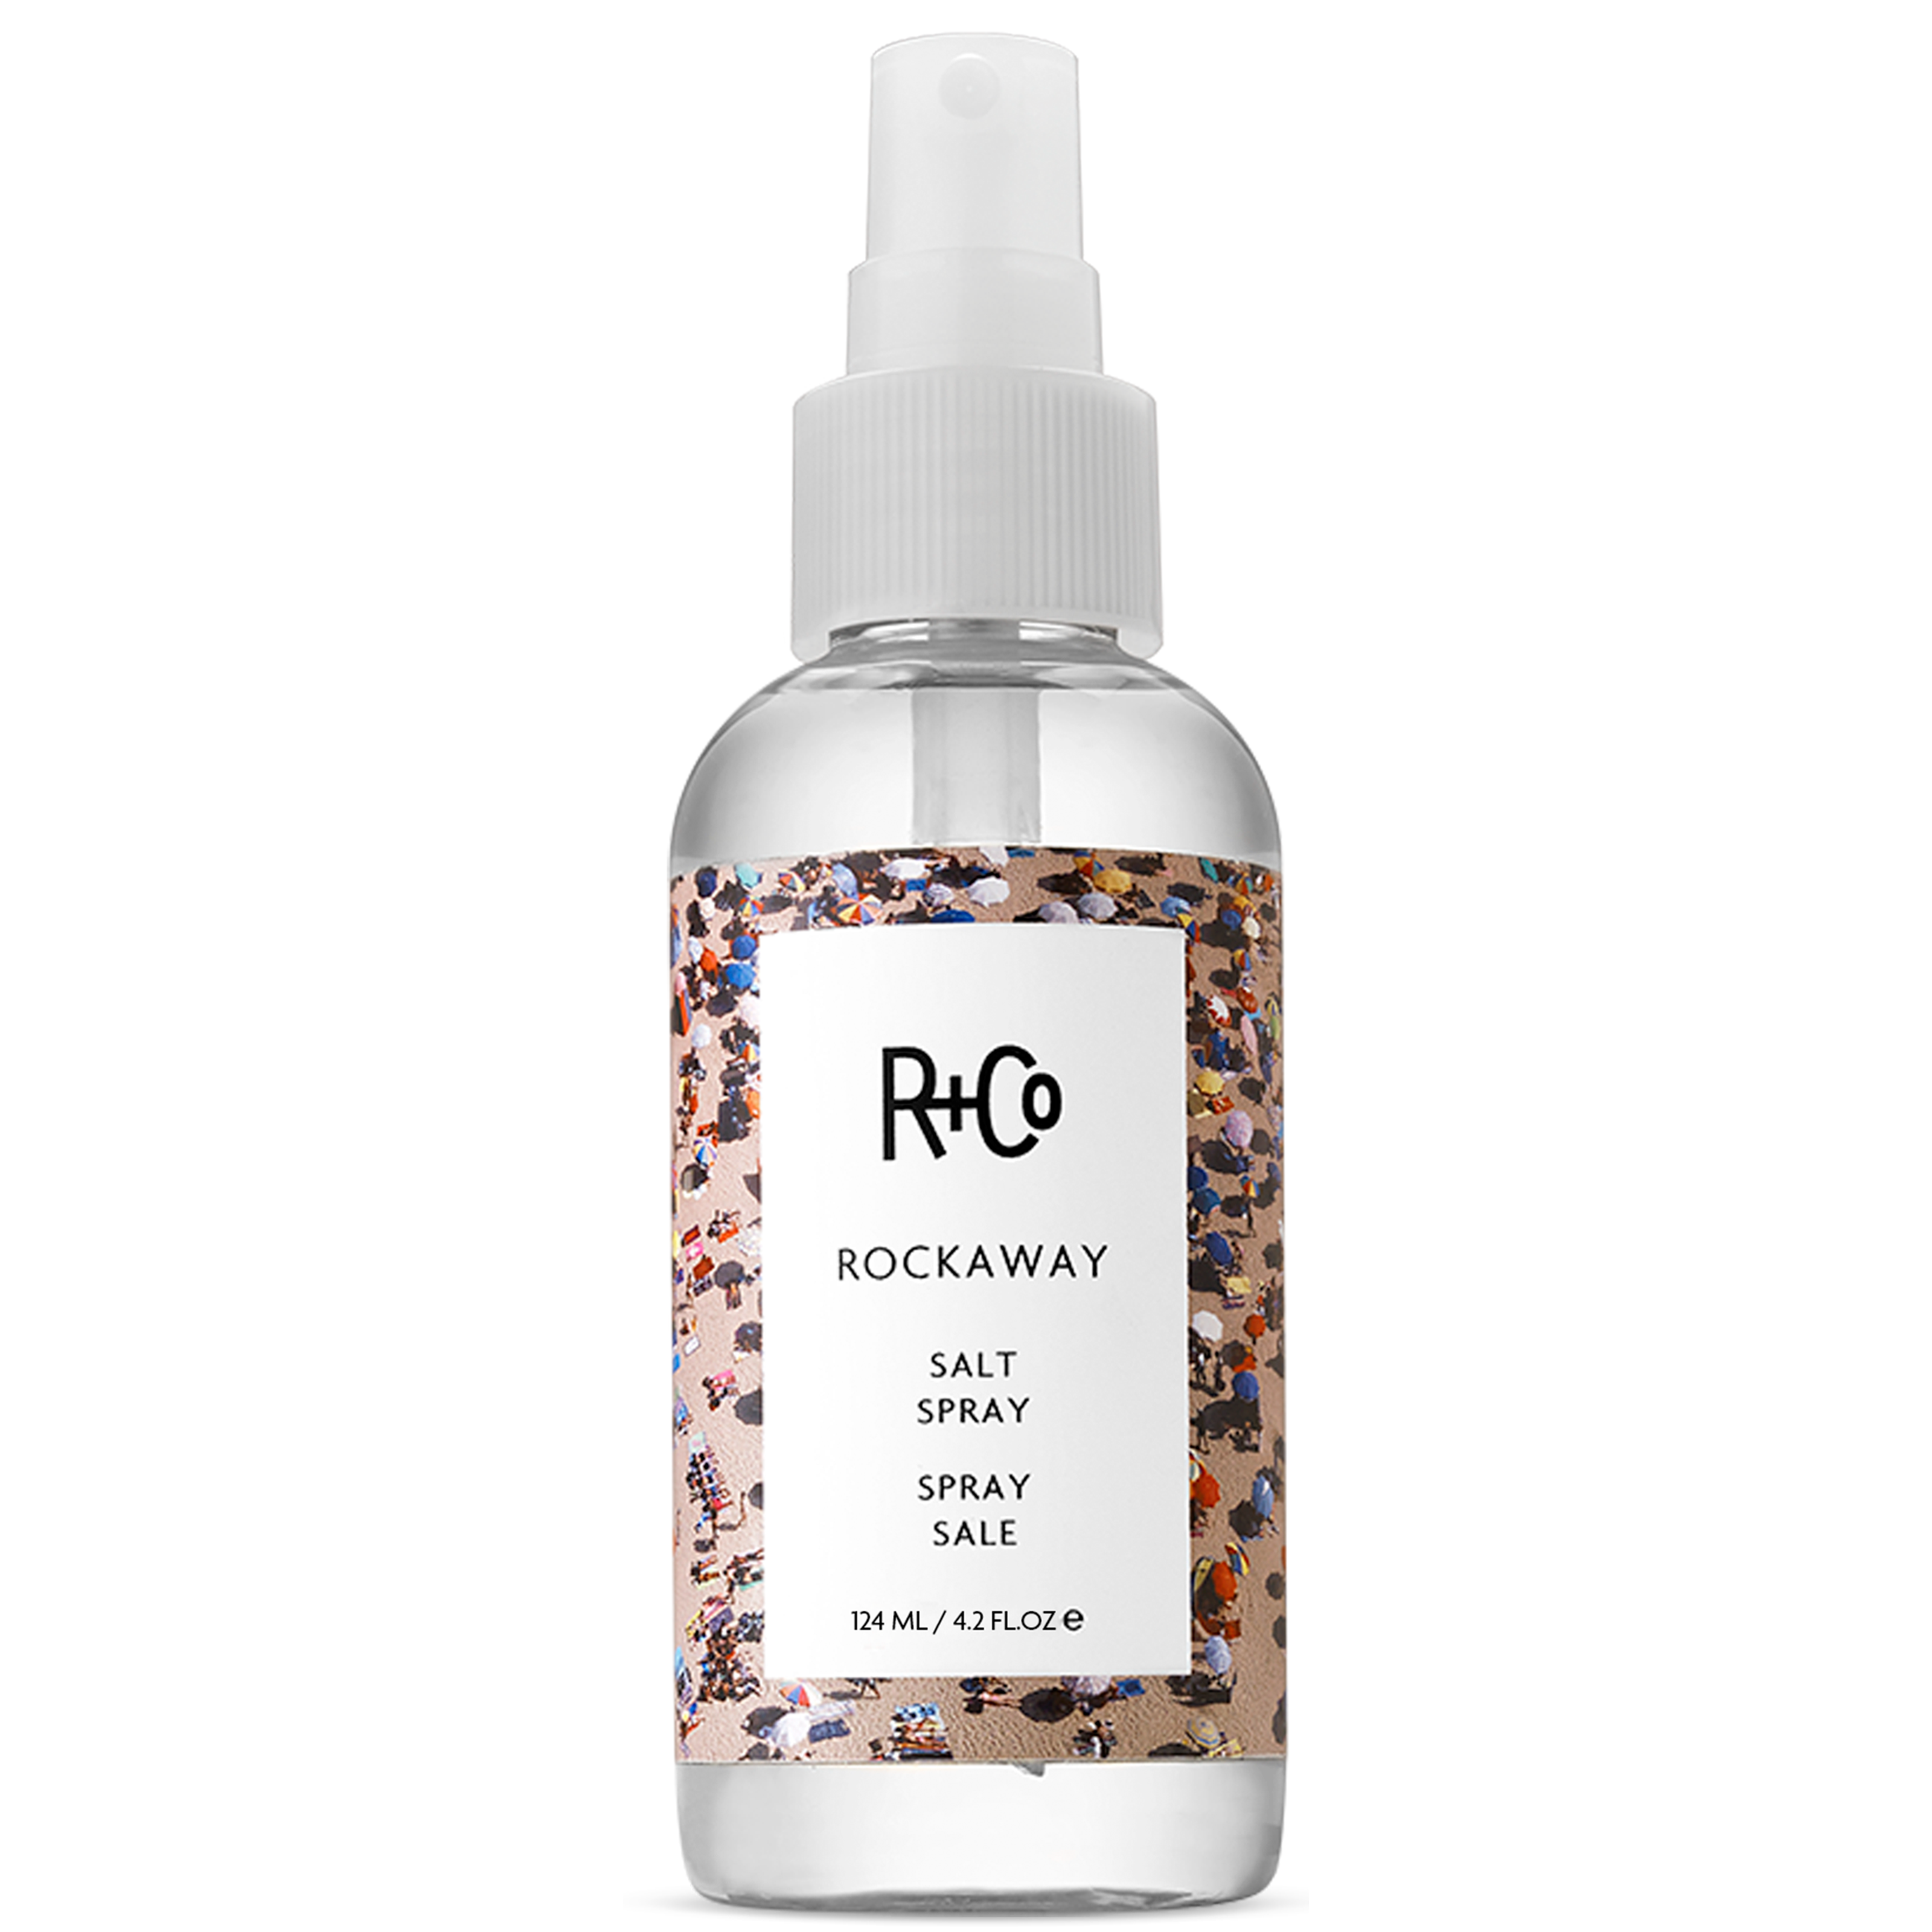 R+Co Rockaway Salt Spray 124 ml